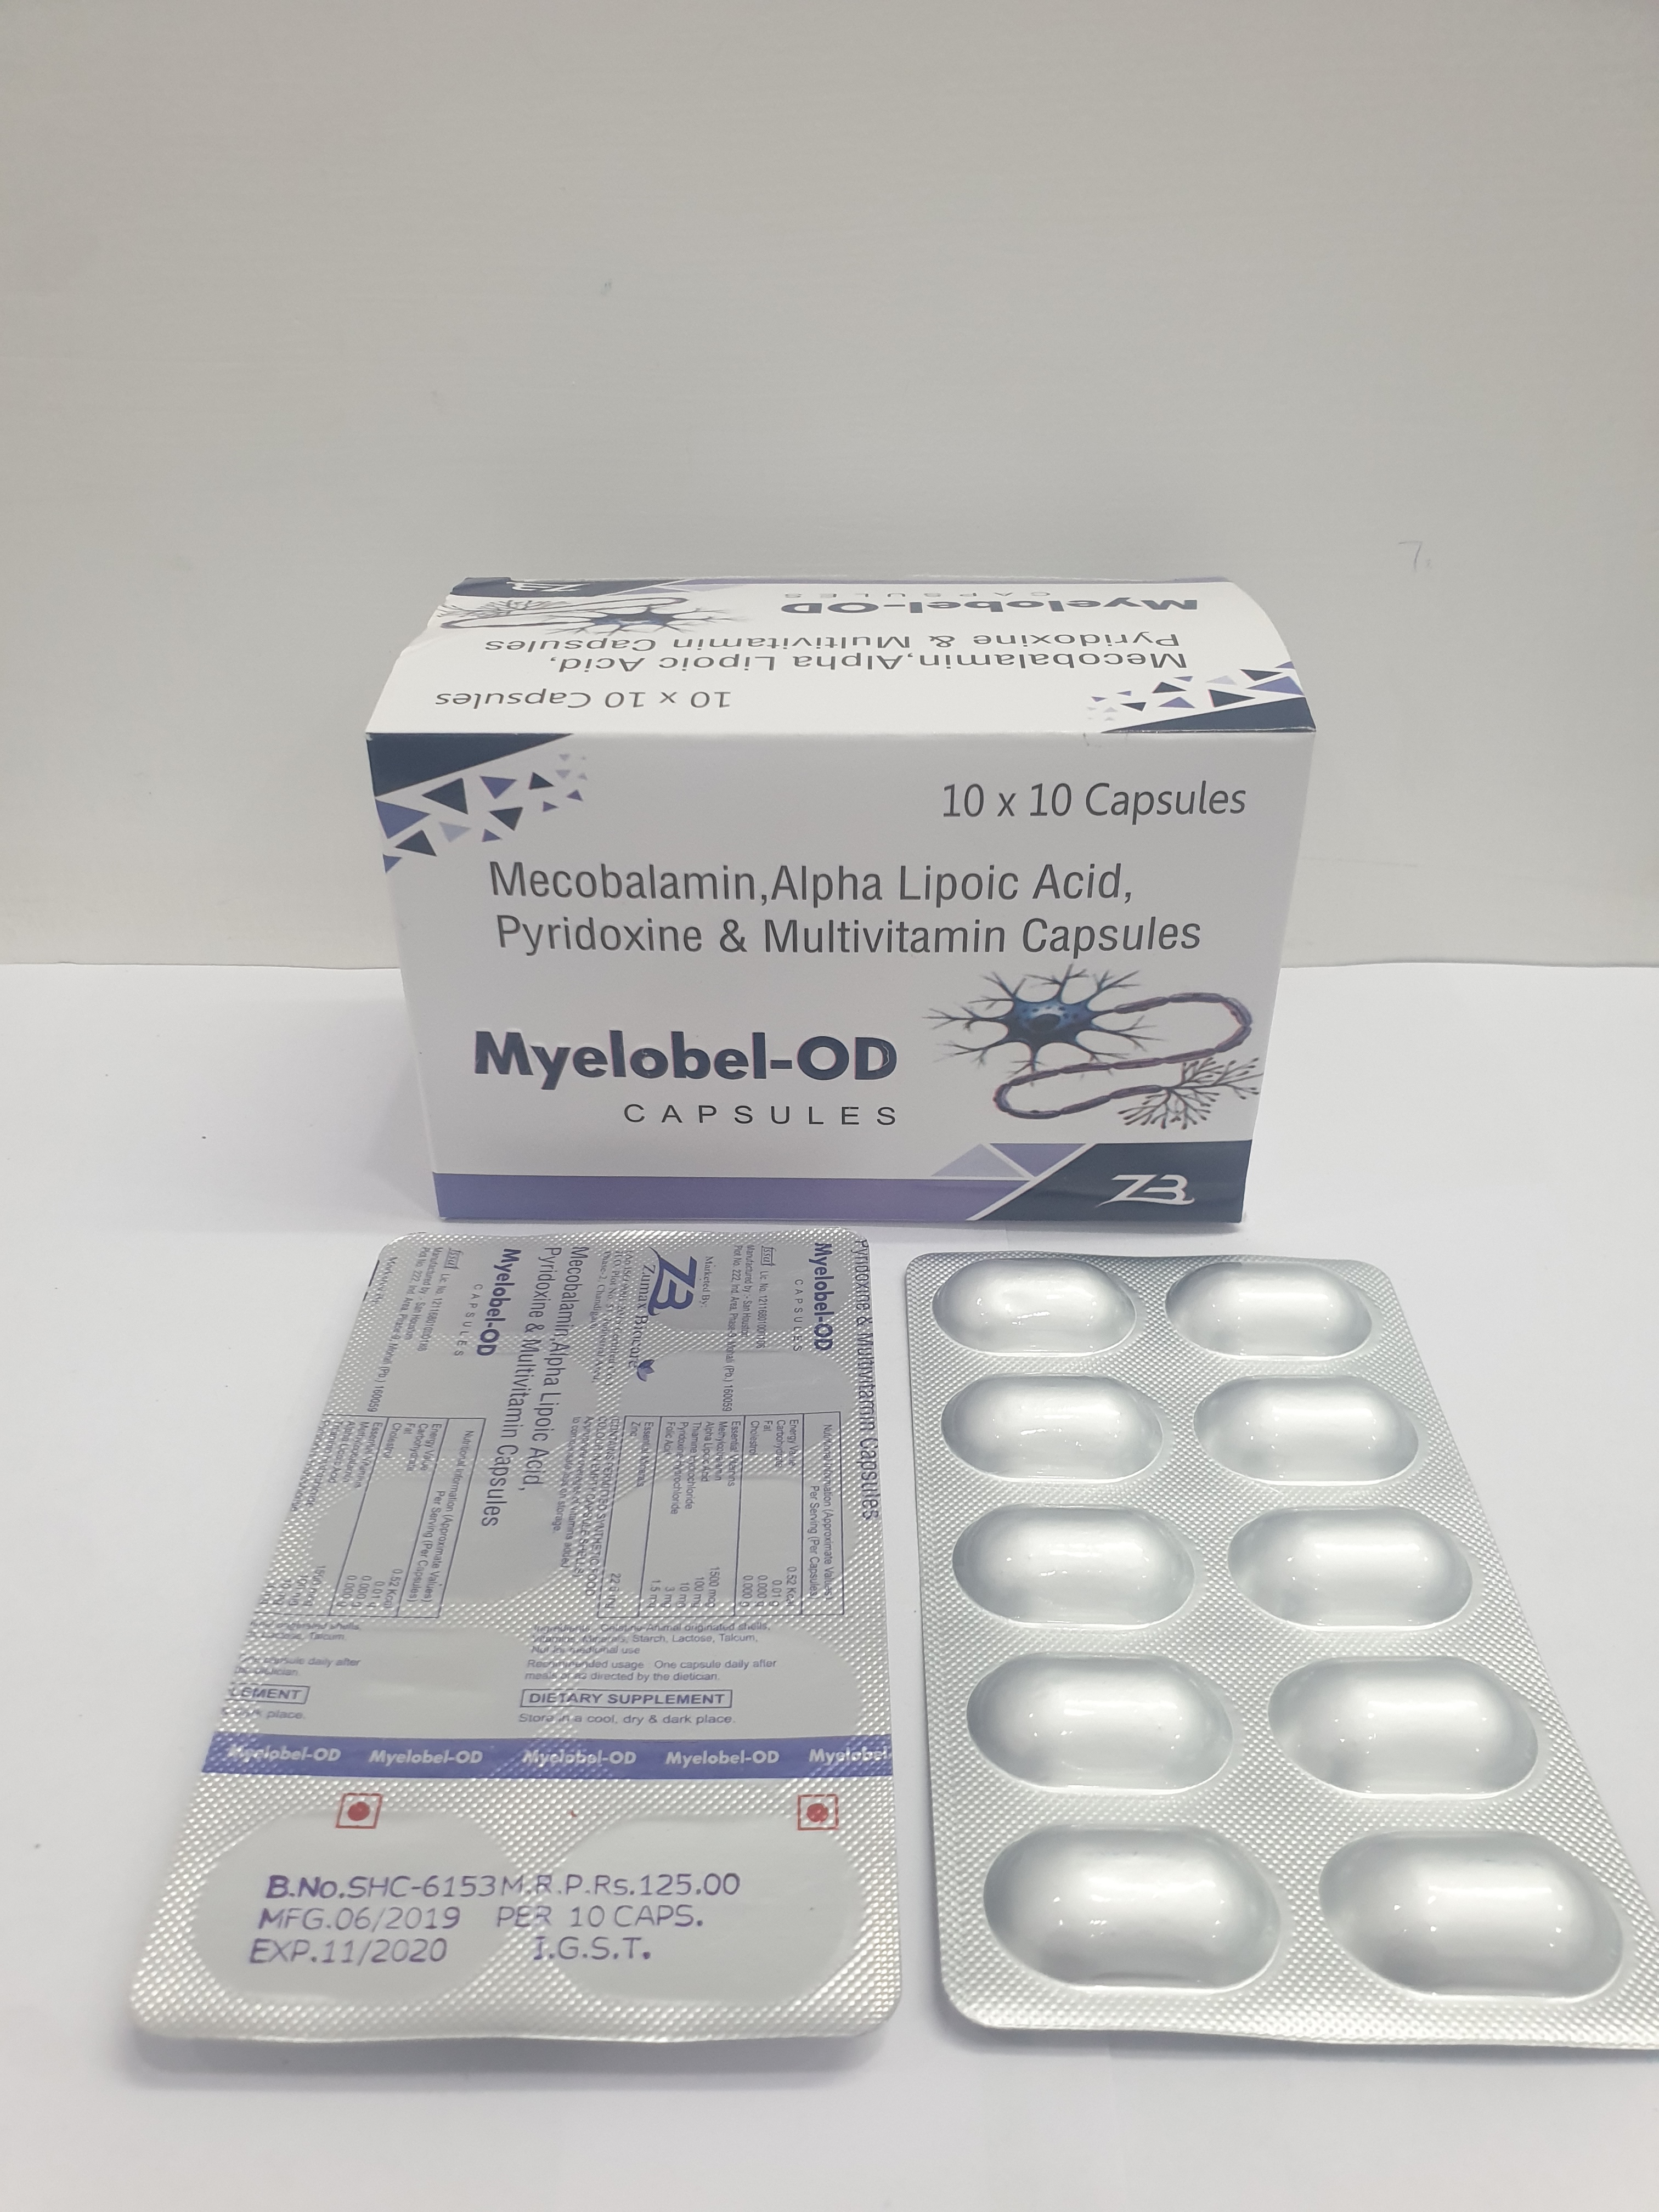 Product Name: Myelobel OD, Compositions of Mecobalamin, Alpha Lipoi Acid, Pyridoxine & Multivitamin Capsules are Mecobalamin, Alpha Lipoi Acid, Pyridoxine & Multivitamin Capsules - Zumax Biocare